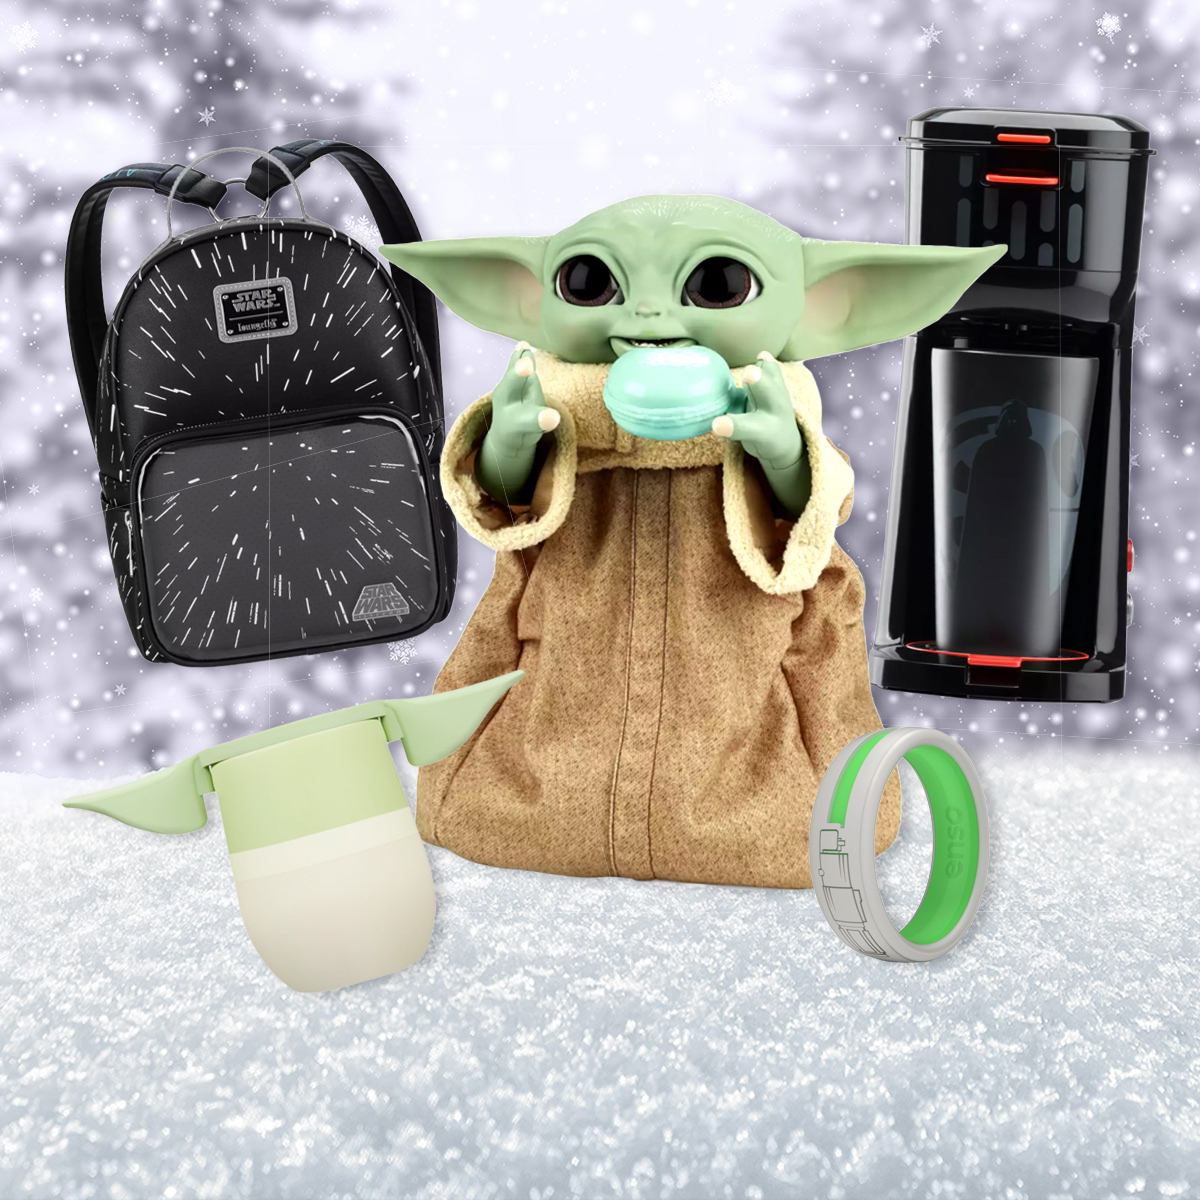 Disney Mini Backpack The Mandalorian Loungefly Baby Yoda New Gift